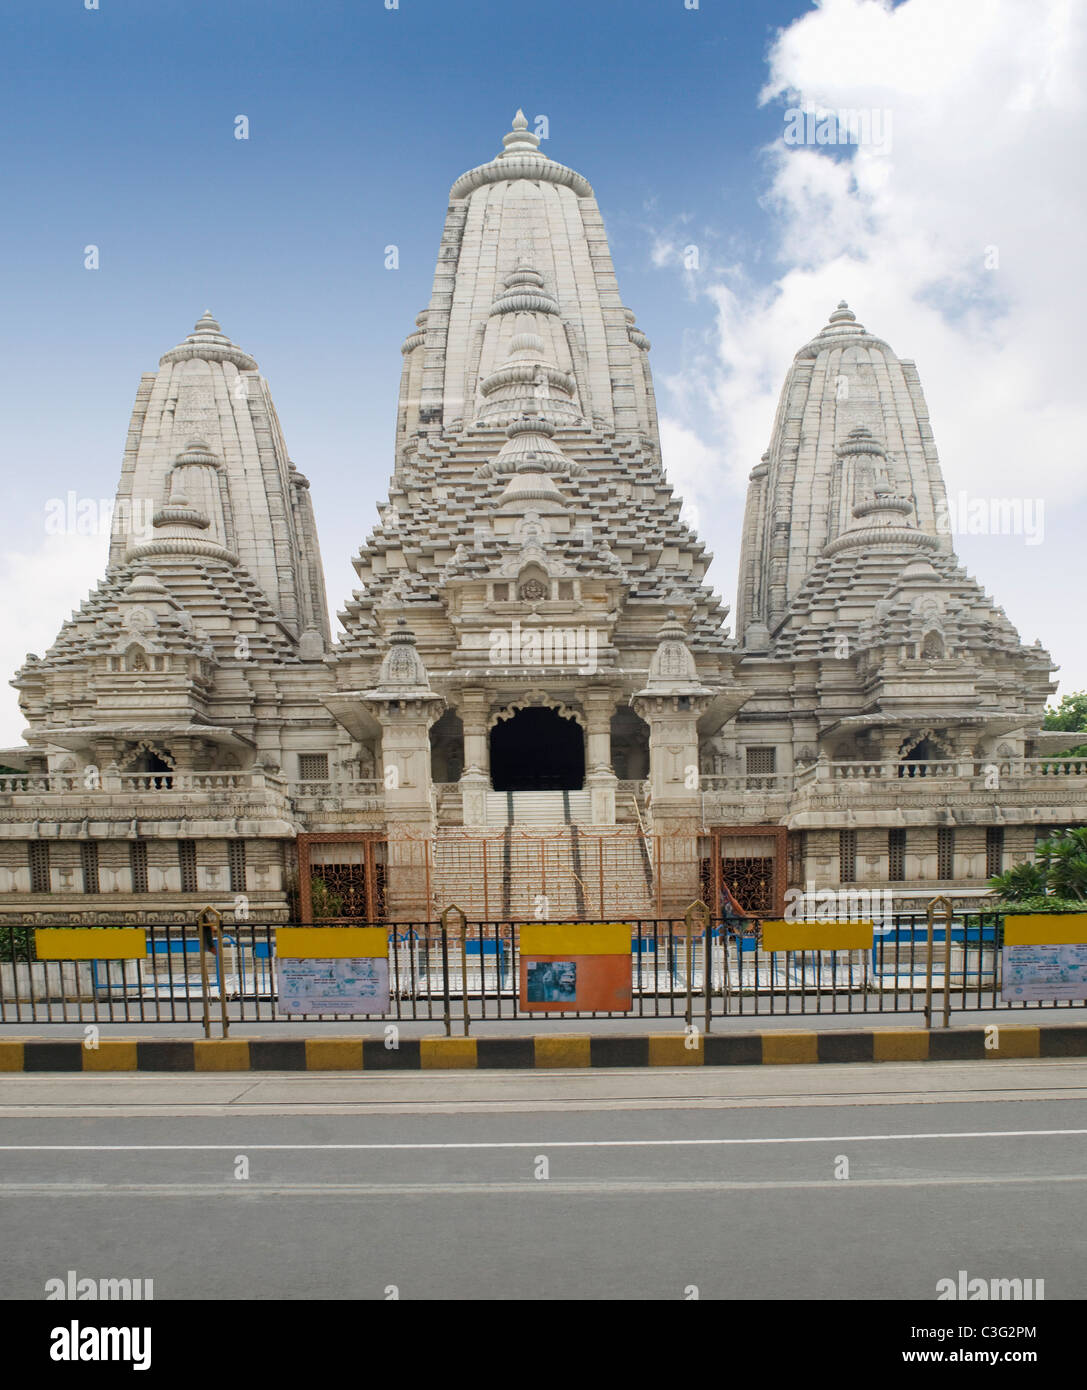 Facade of a temple, Birla Temple, Kolkata, West Bengal, India Stock Photo